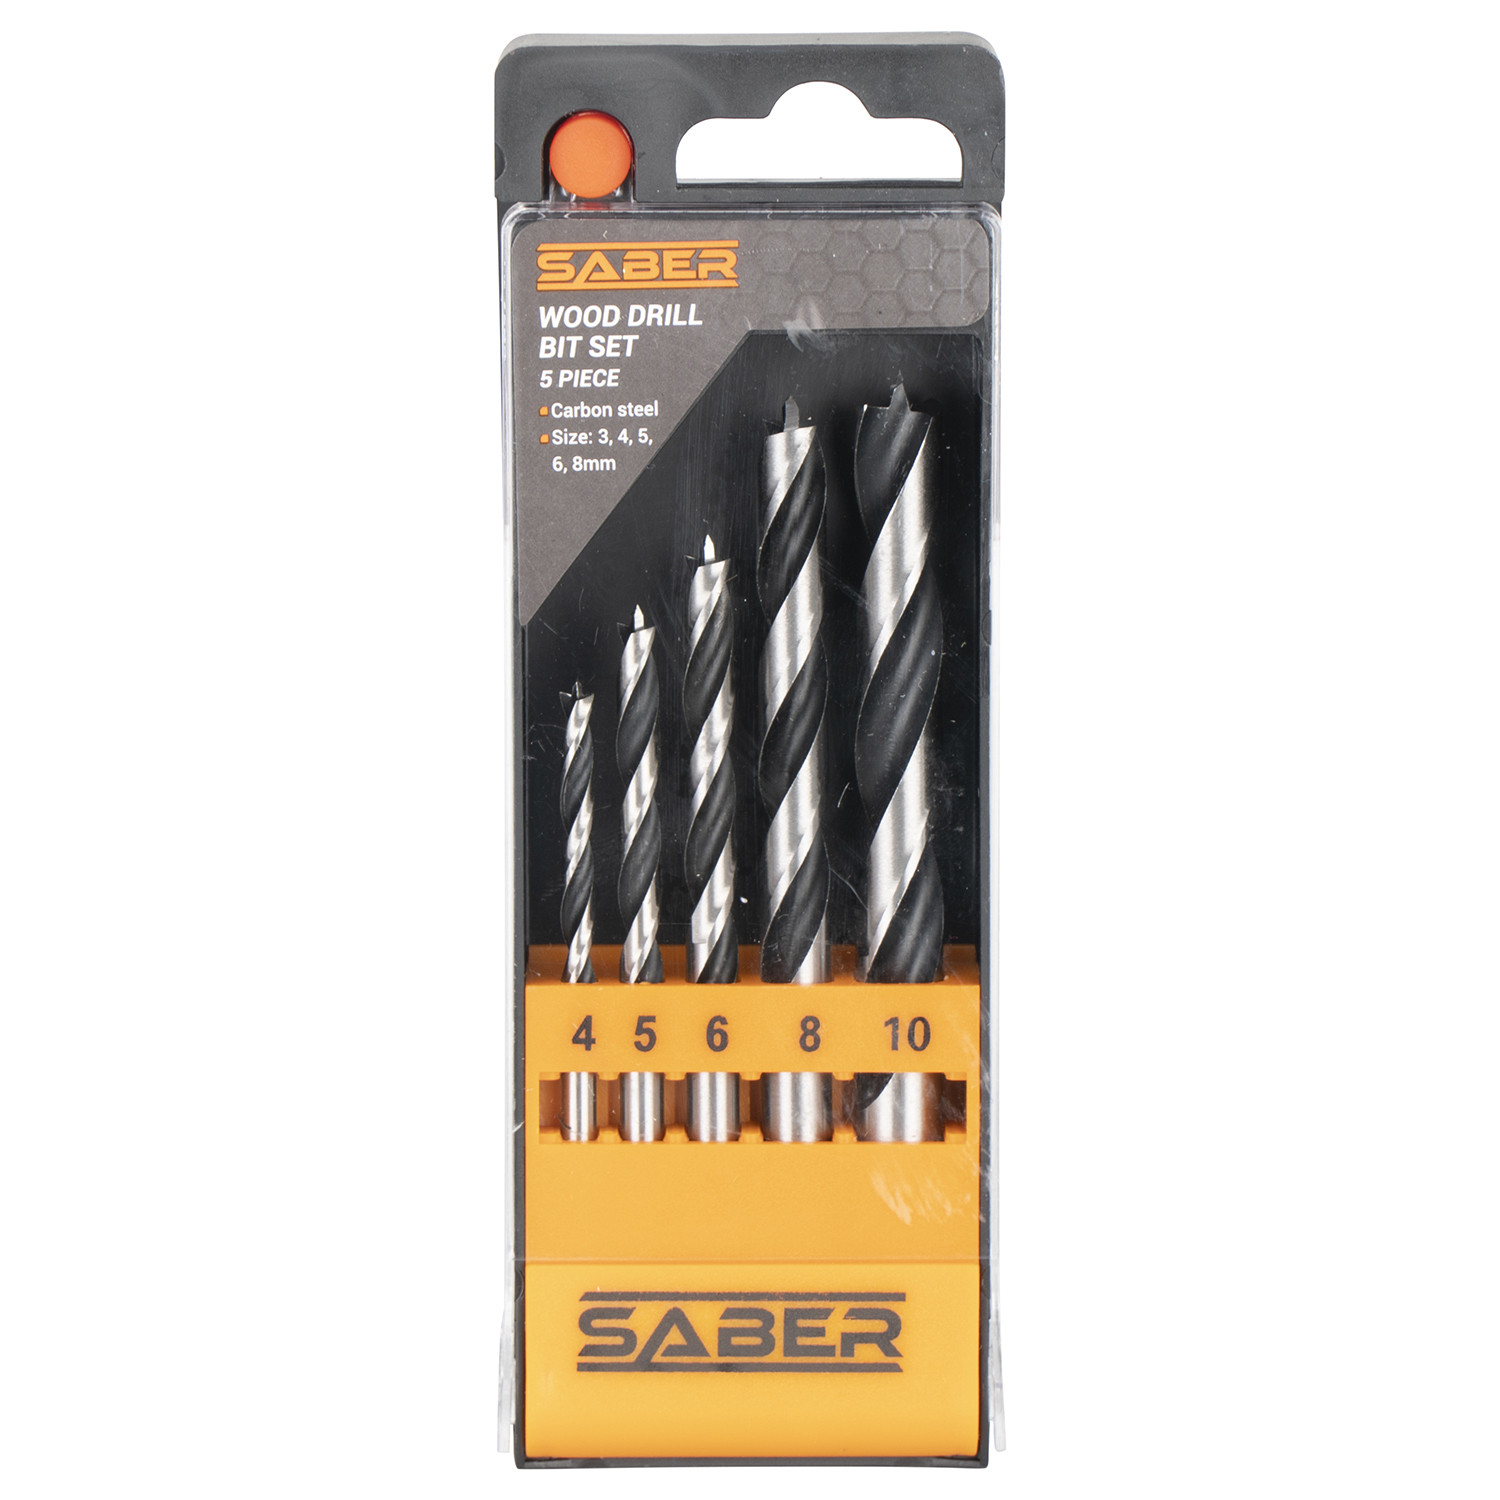 Saber 5-Piece Wood Drill Bit Set Image